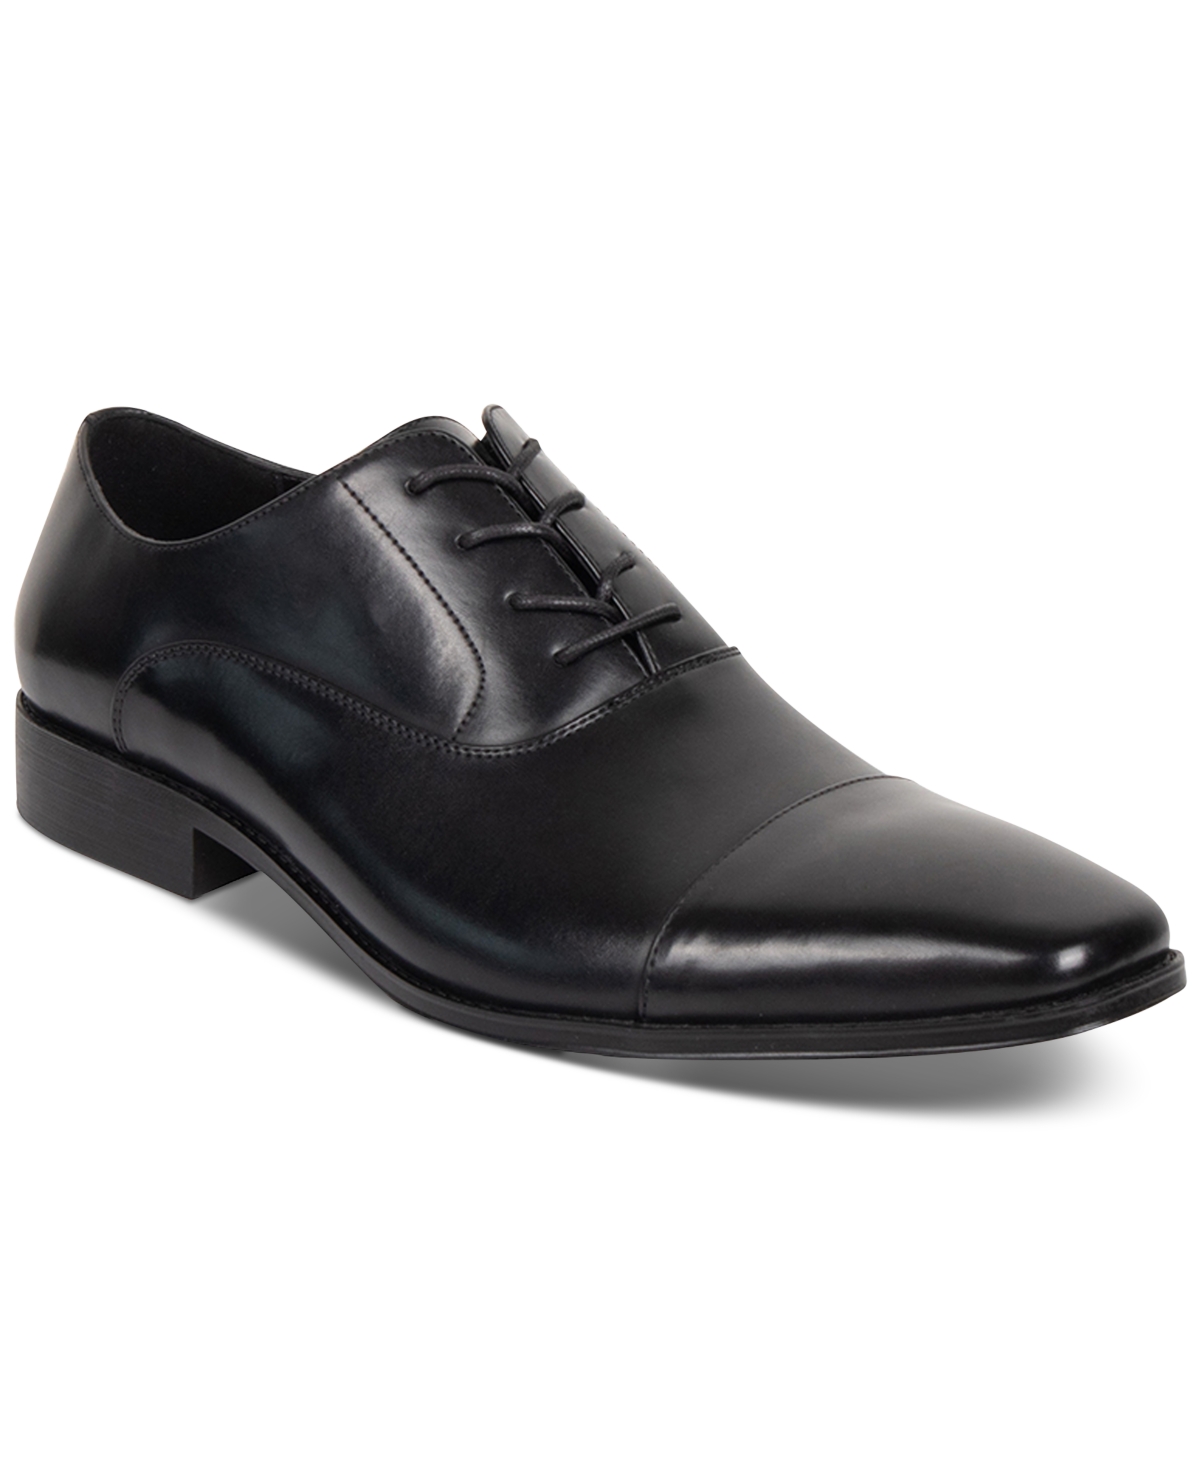 Men's Cap-Toe Dress Shoe - Black